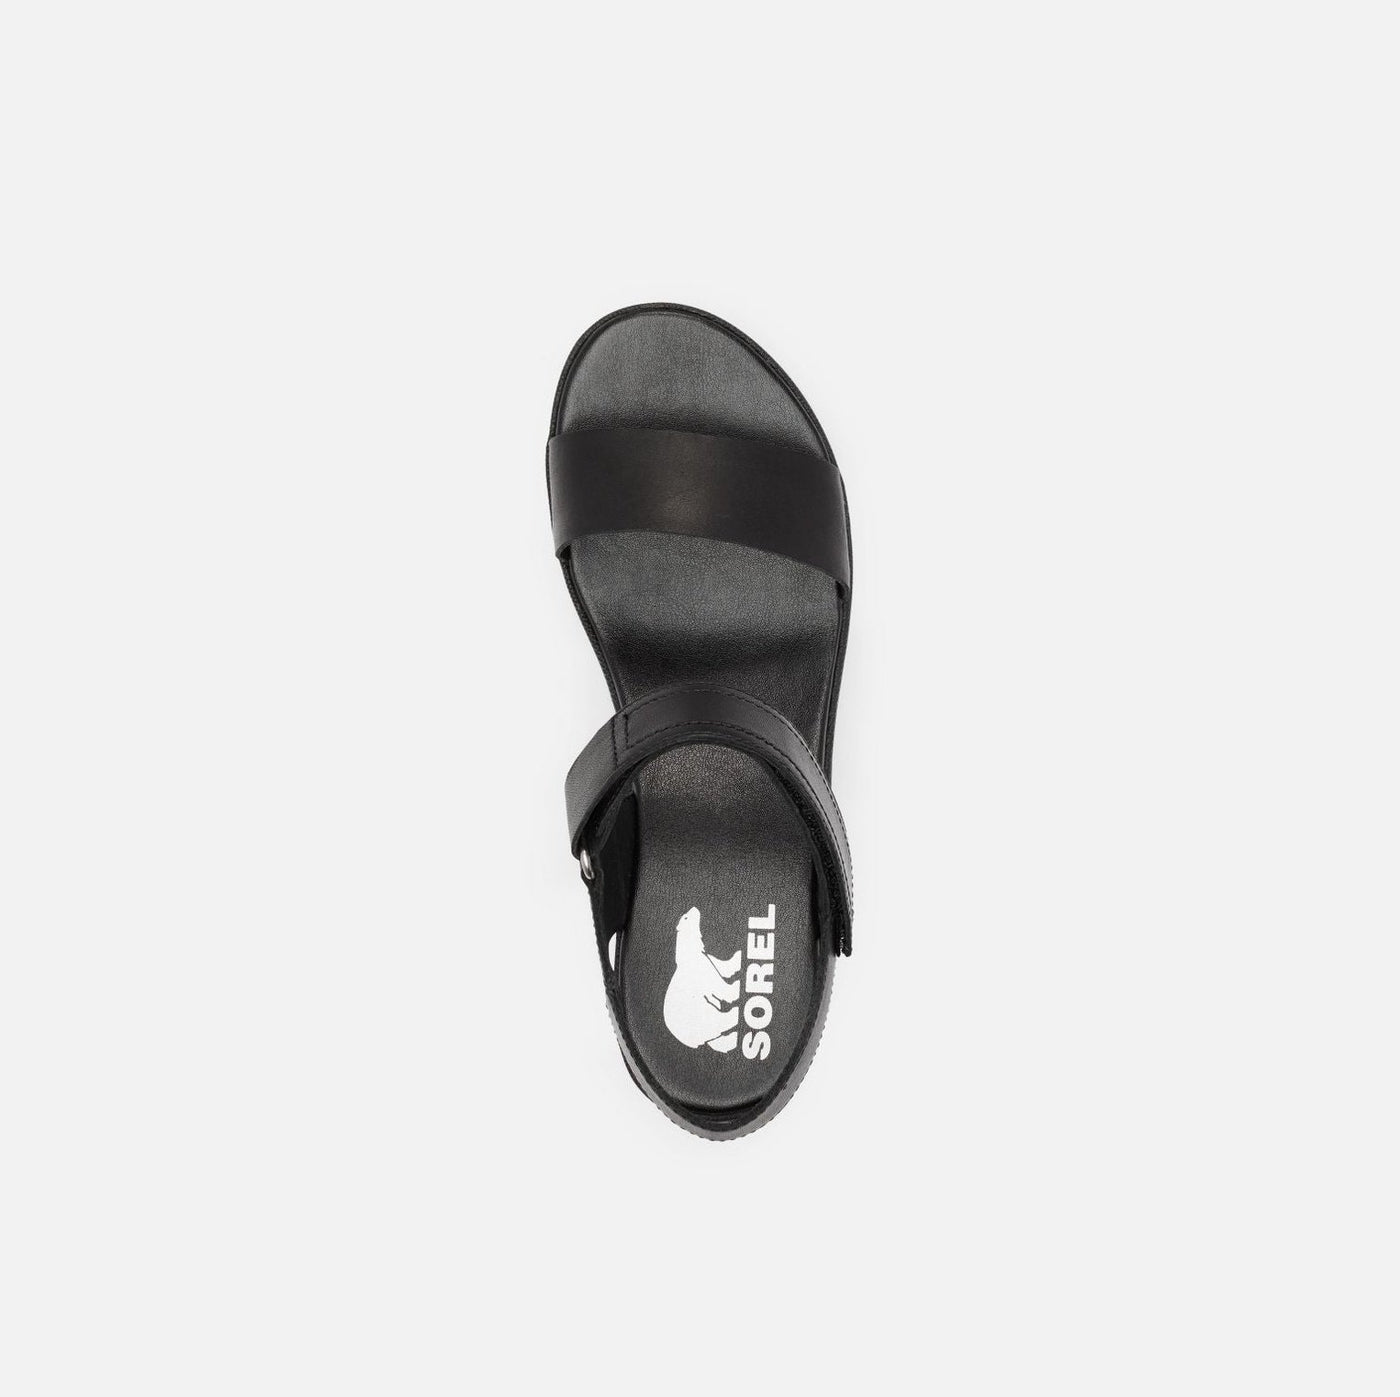 Sorel Cameron Wedge Sandal